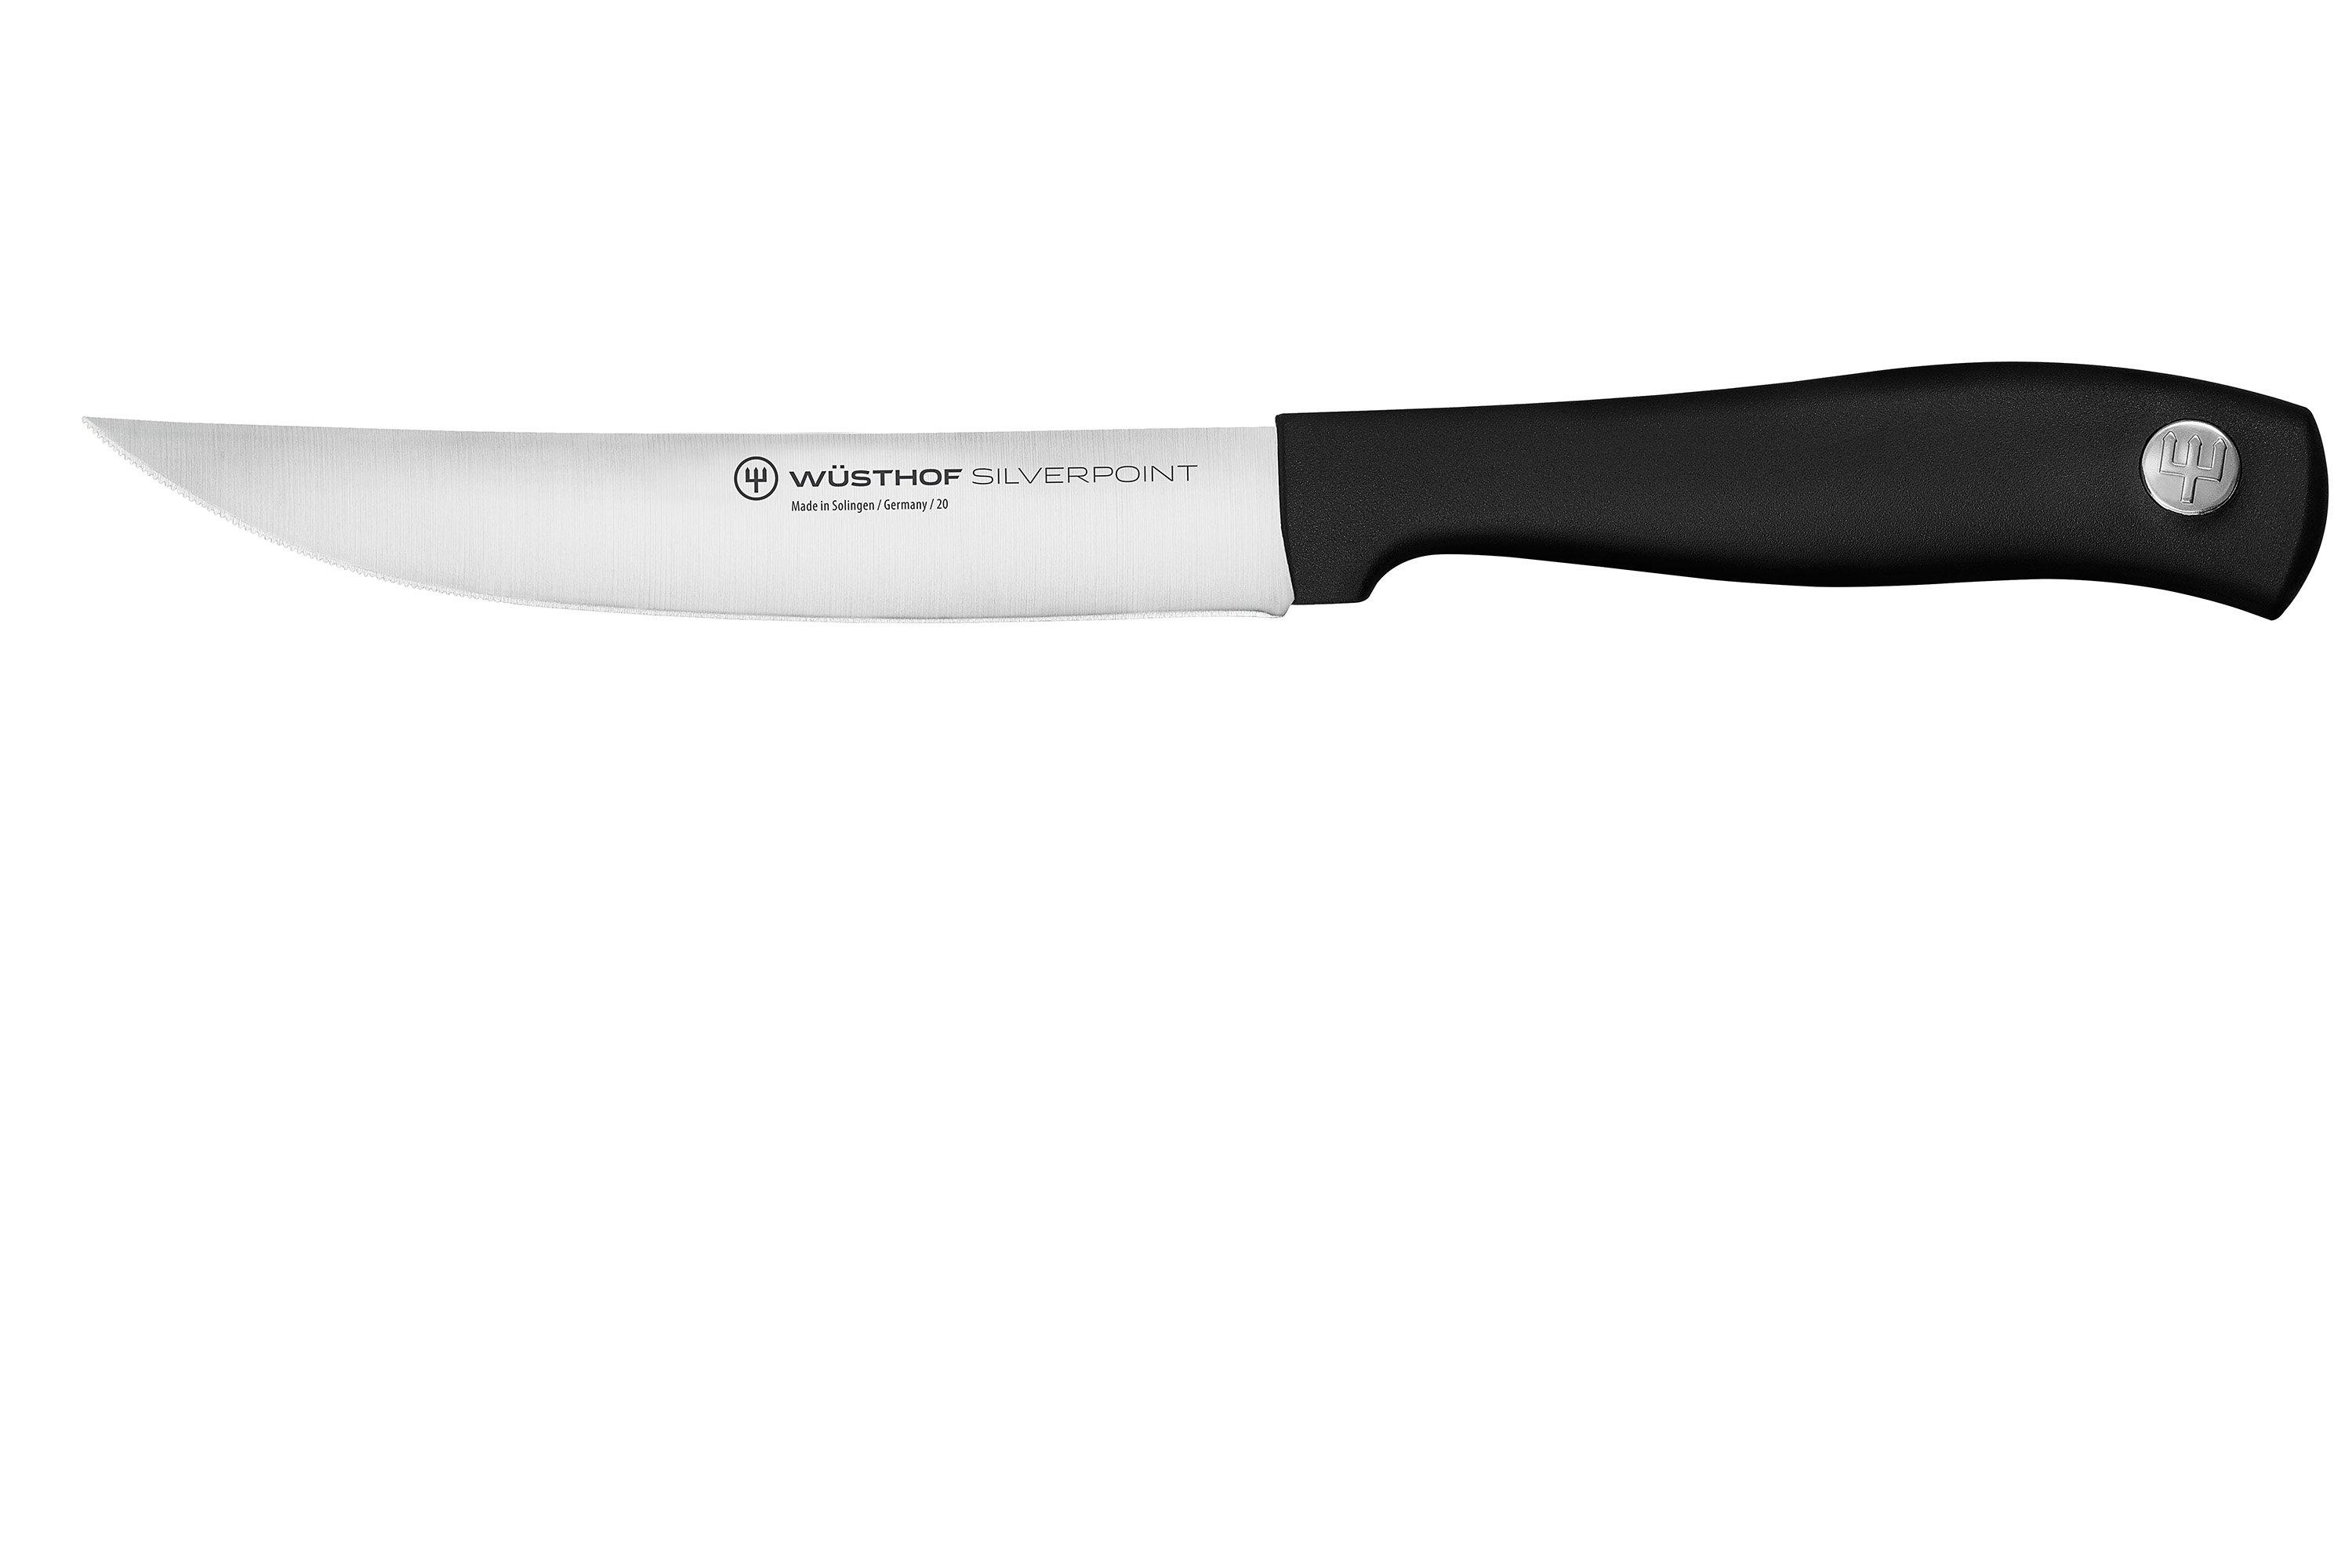 Cuchillo para carne silverpoint 13 cm Wusthof